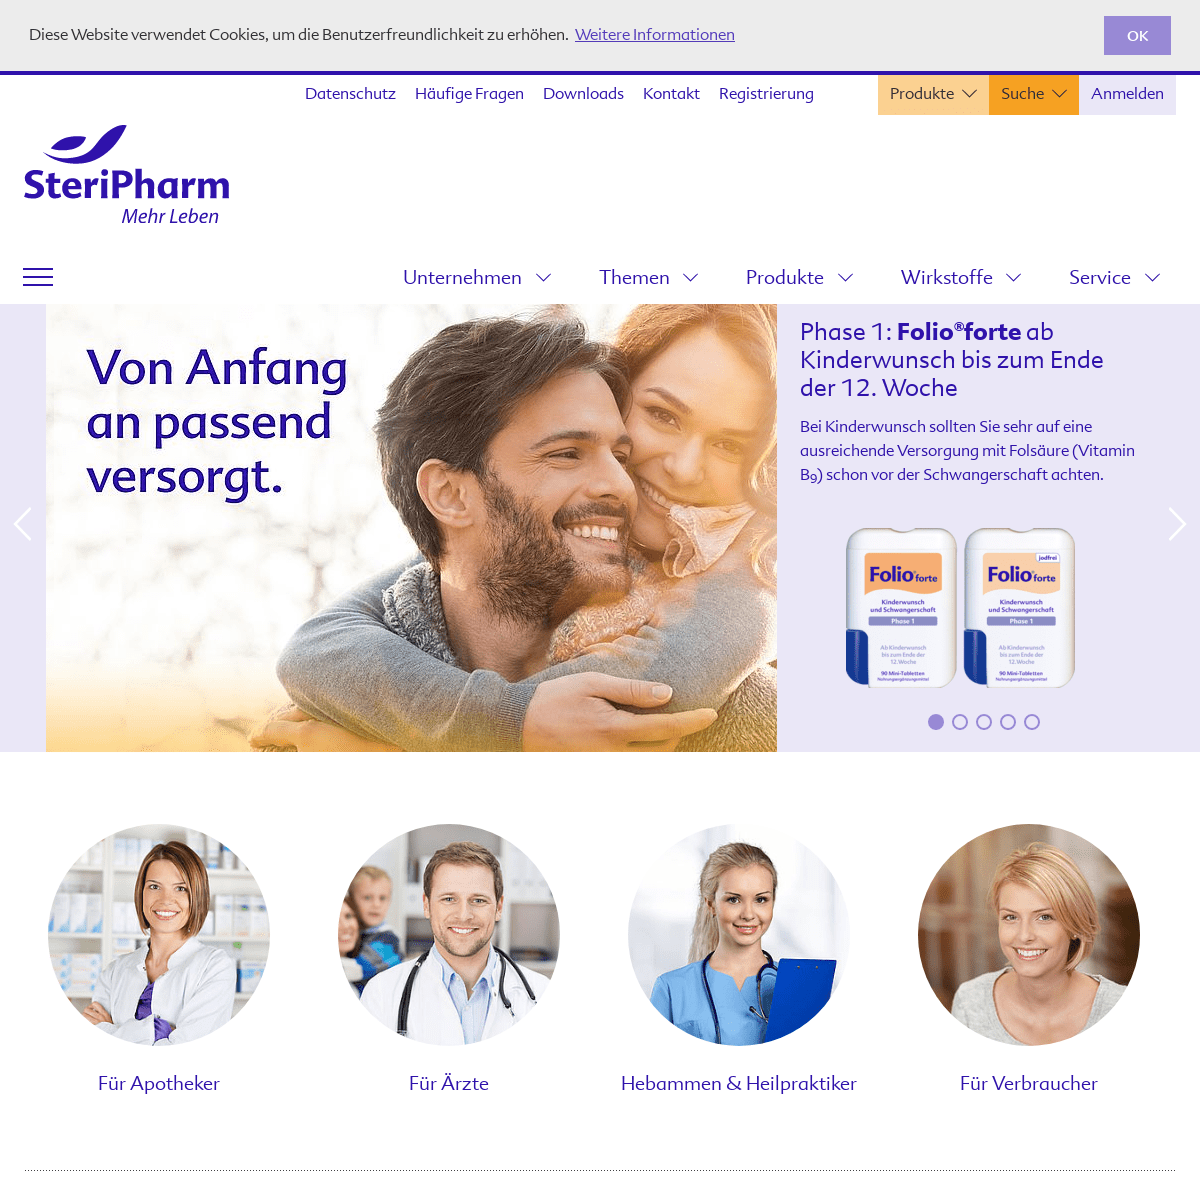 A complete backup of steripharm.de